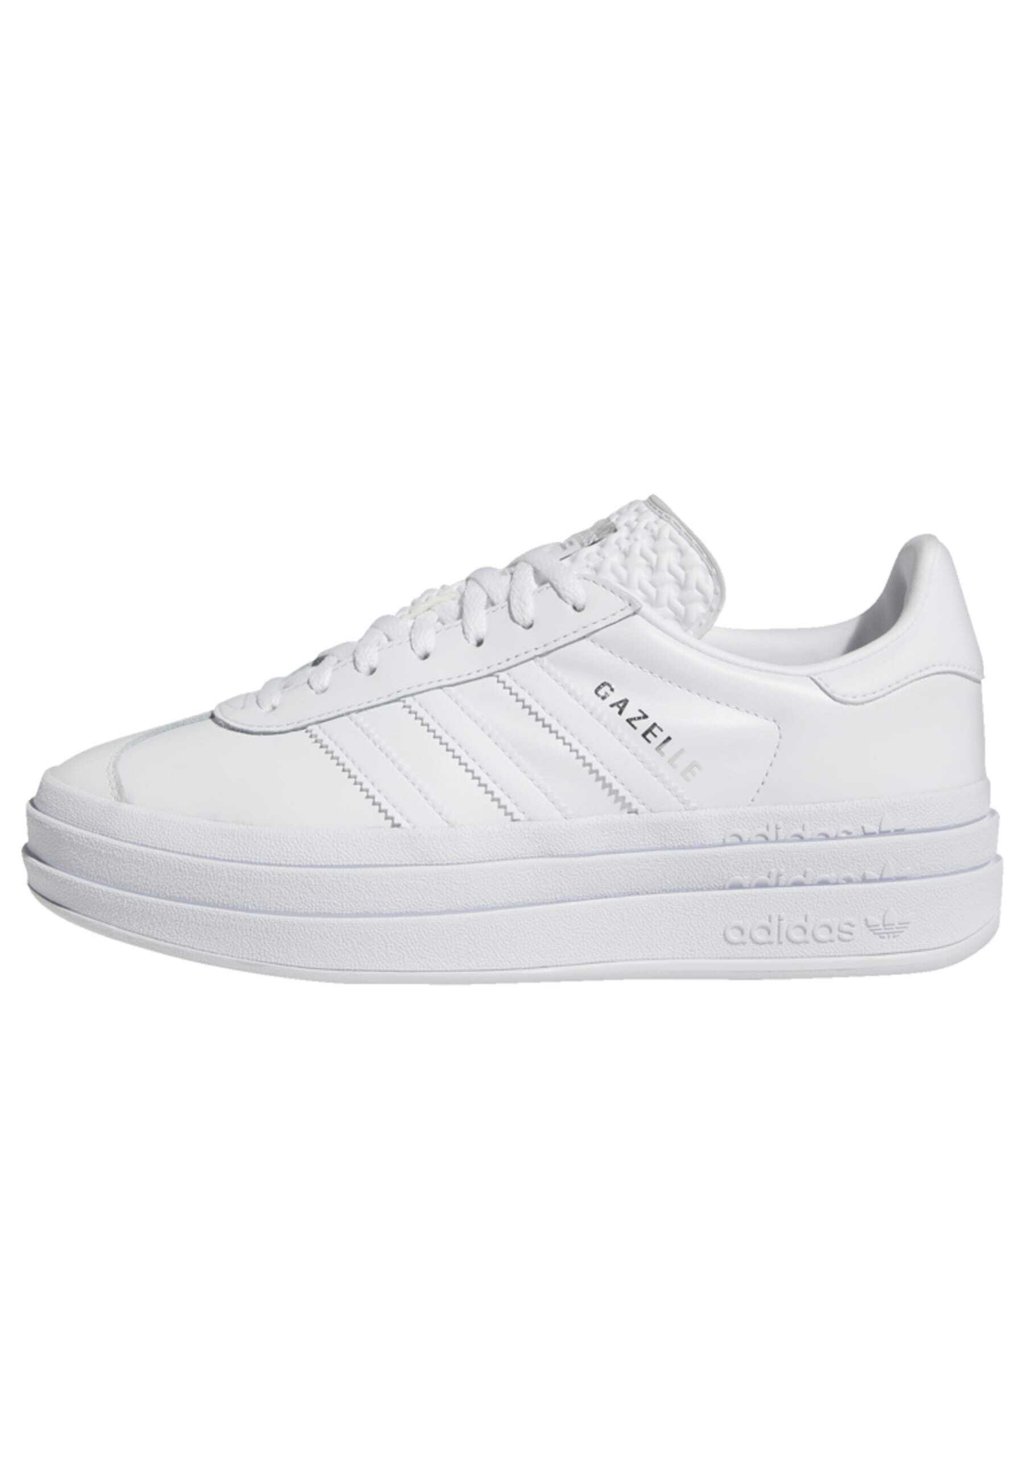 Кроссовки adidas Originals Gazelle Bold W, облачно белое облачно белое облачно белое низкие кроссовки ultra adidas sportswear облачно белый